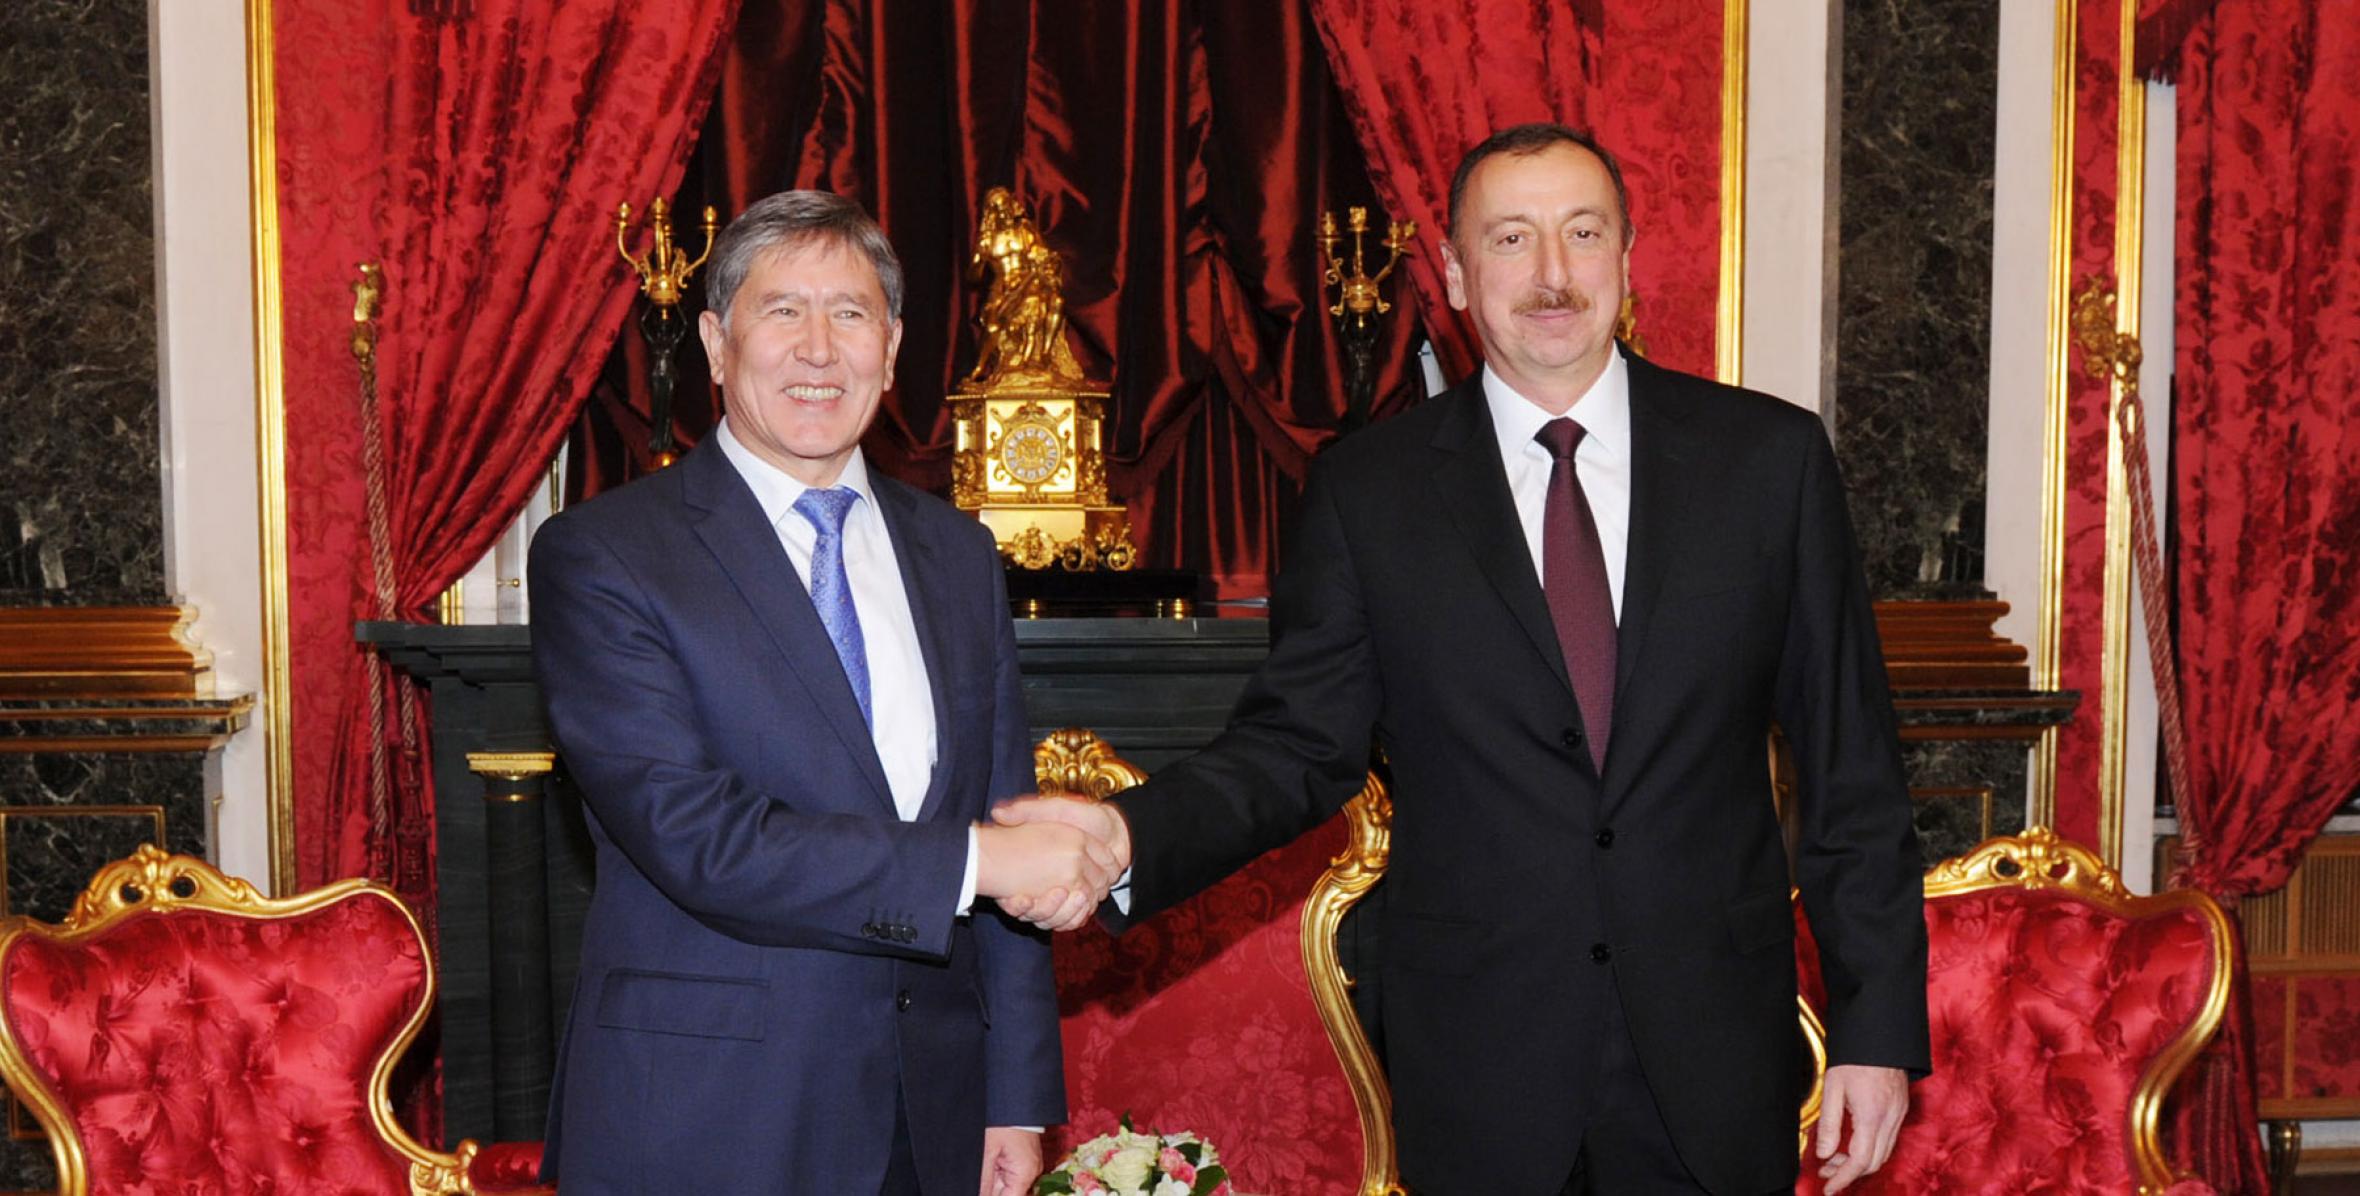 Ilham Aliyev met with President of the Republic of Kyrgyzstan Almazbek Atambayev in Moscow